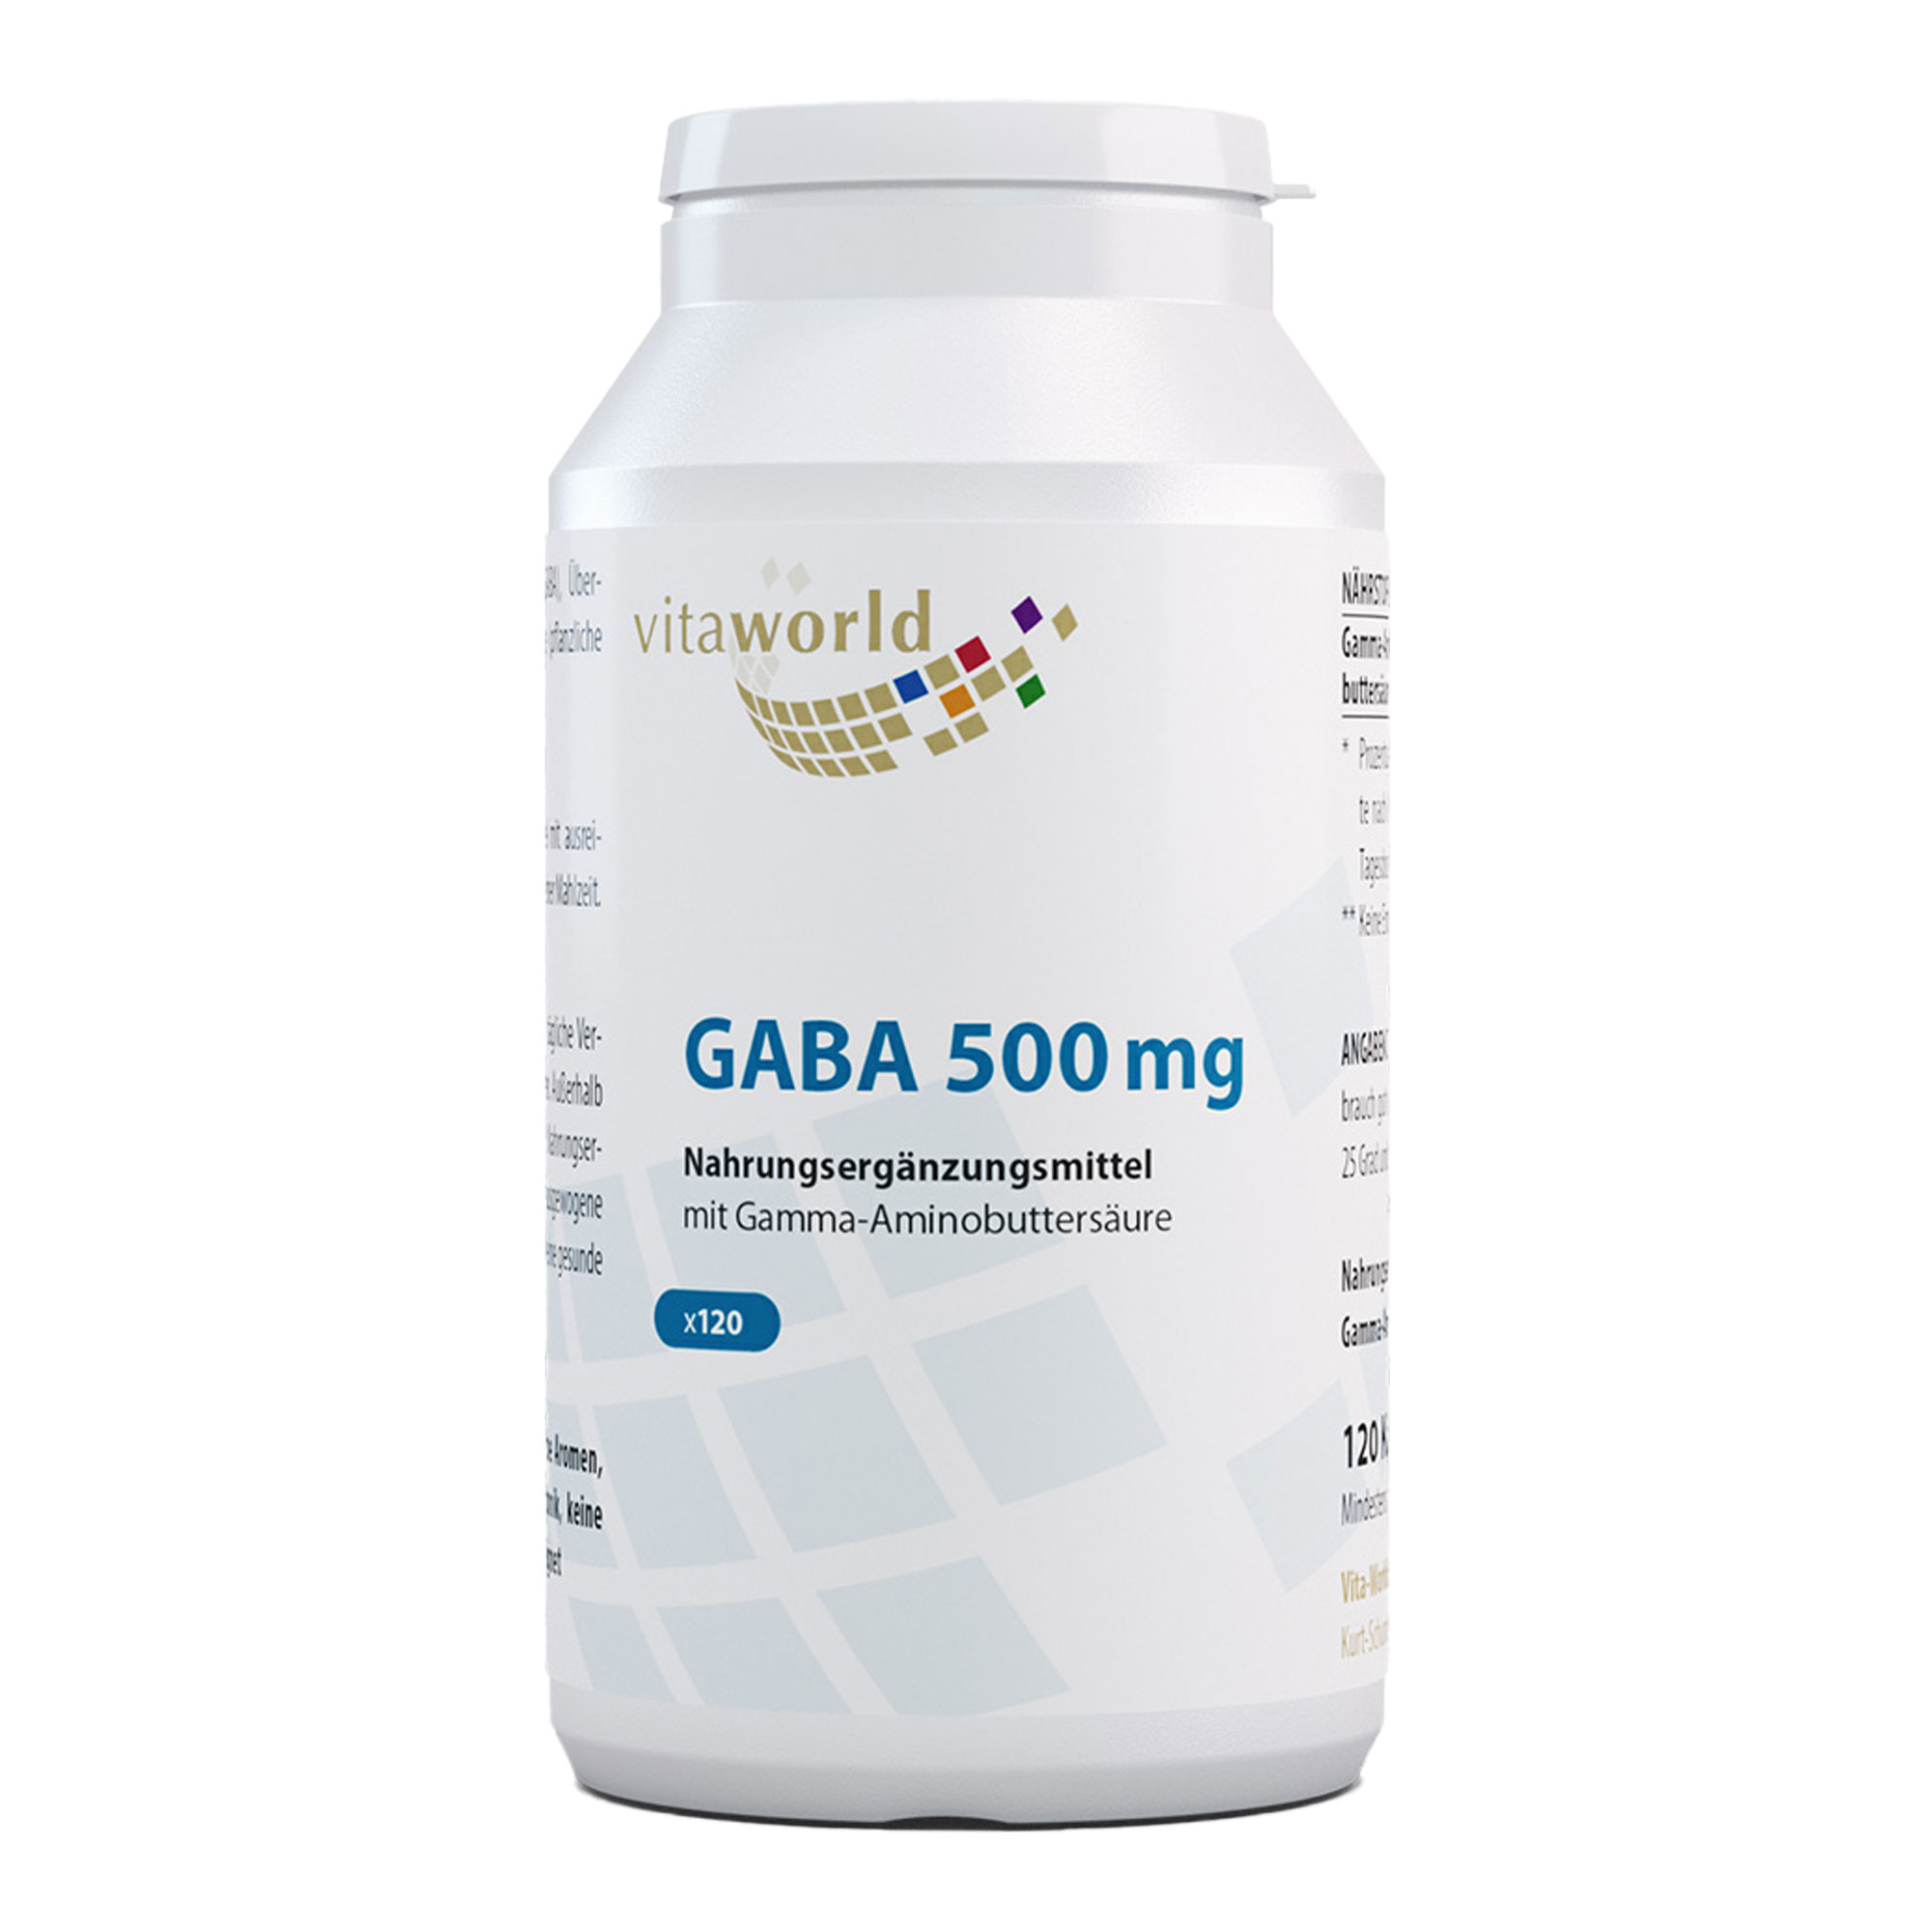 Nahrungsergänzungsmittel mit Gamma-Aminobuttersäure.